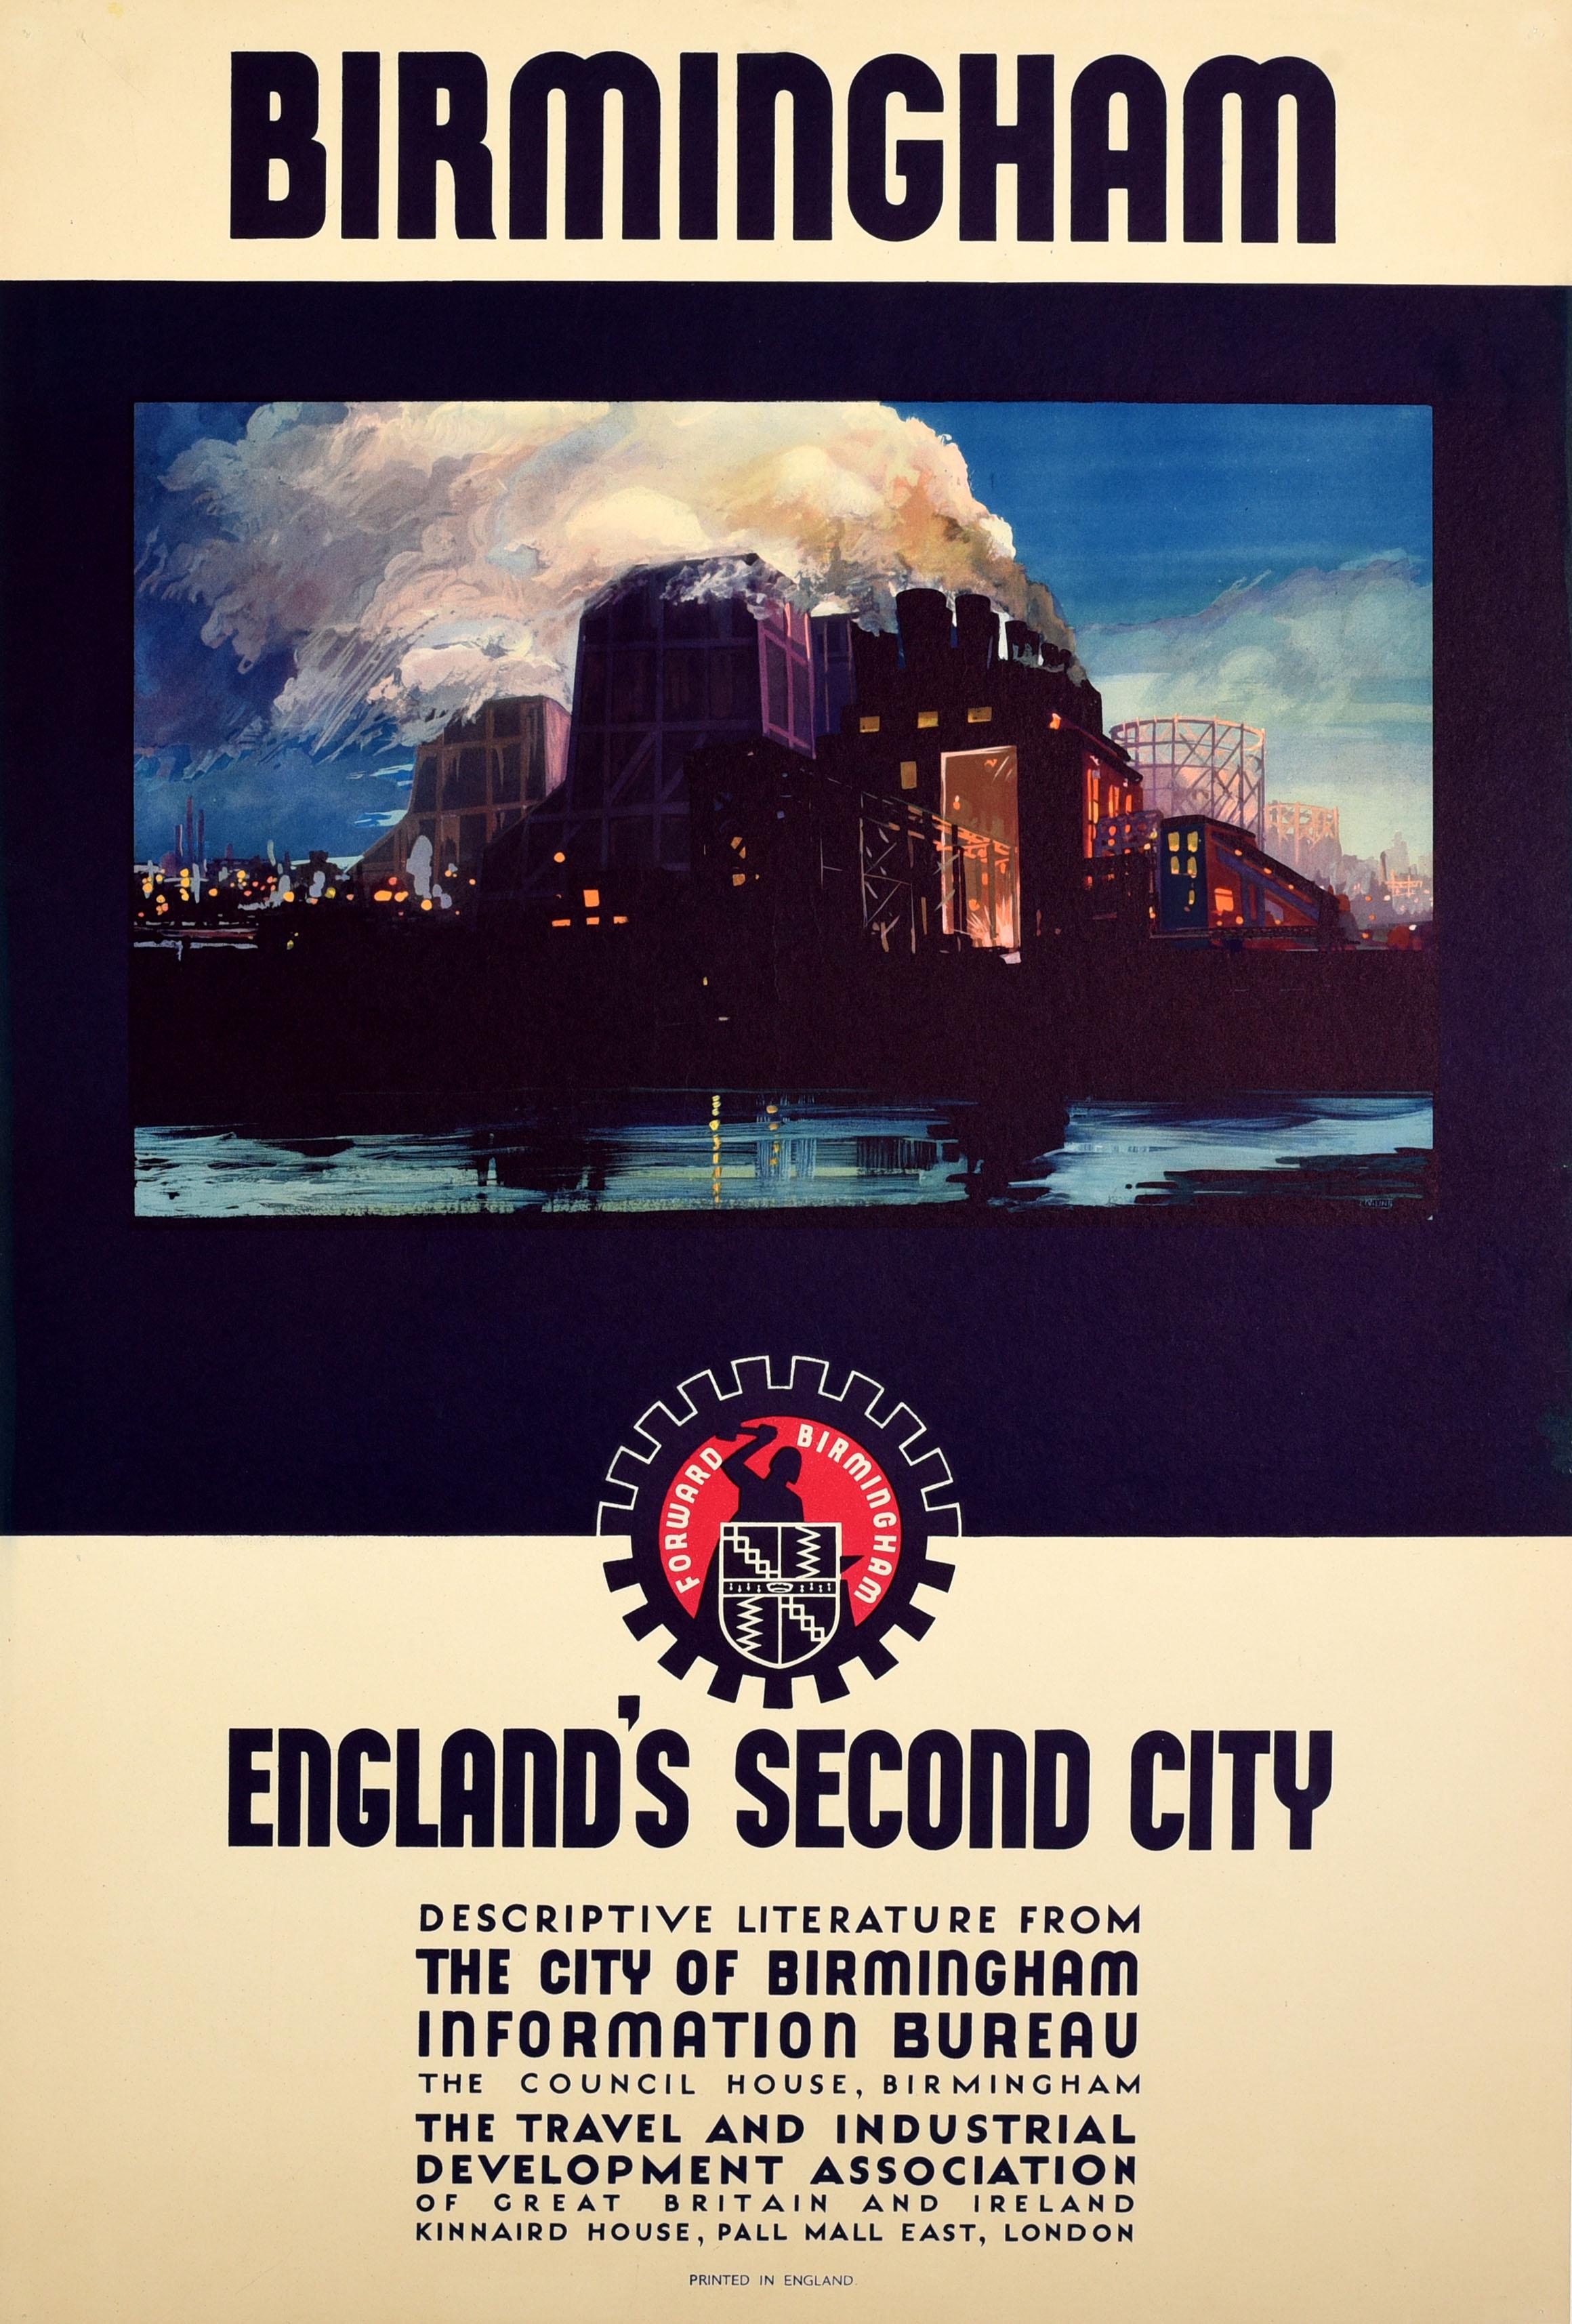 Unknown Print - Original Vintage Travel Poster Birmingham England Second City Art Deco Industry